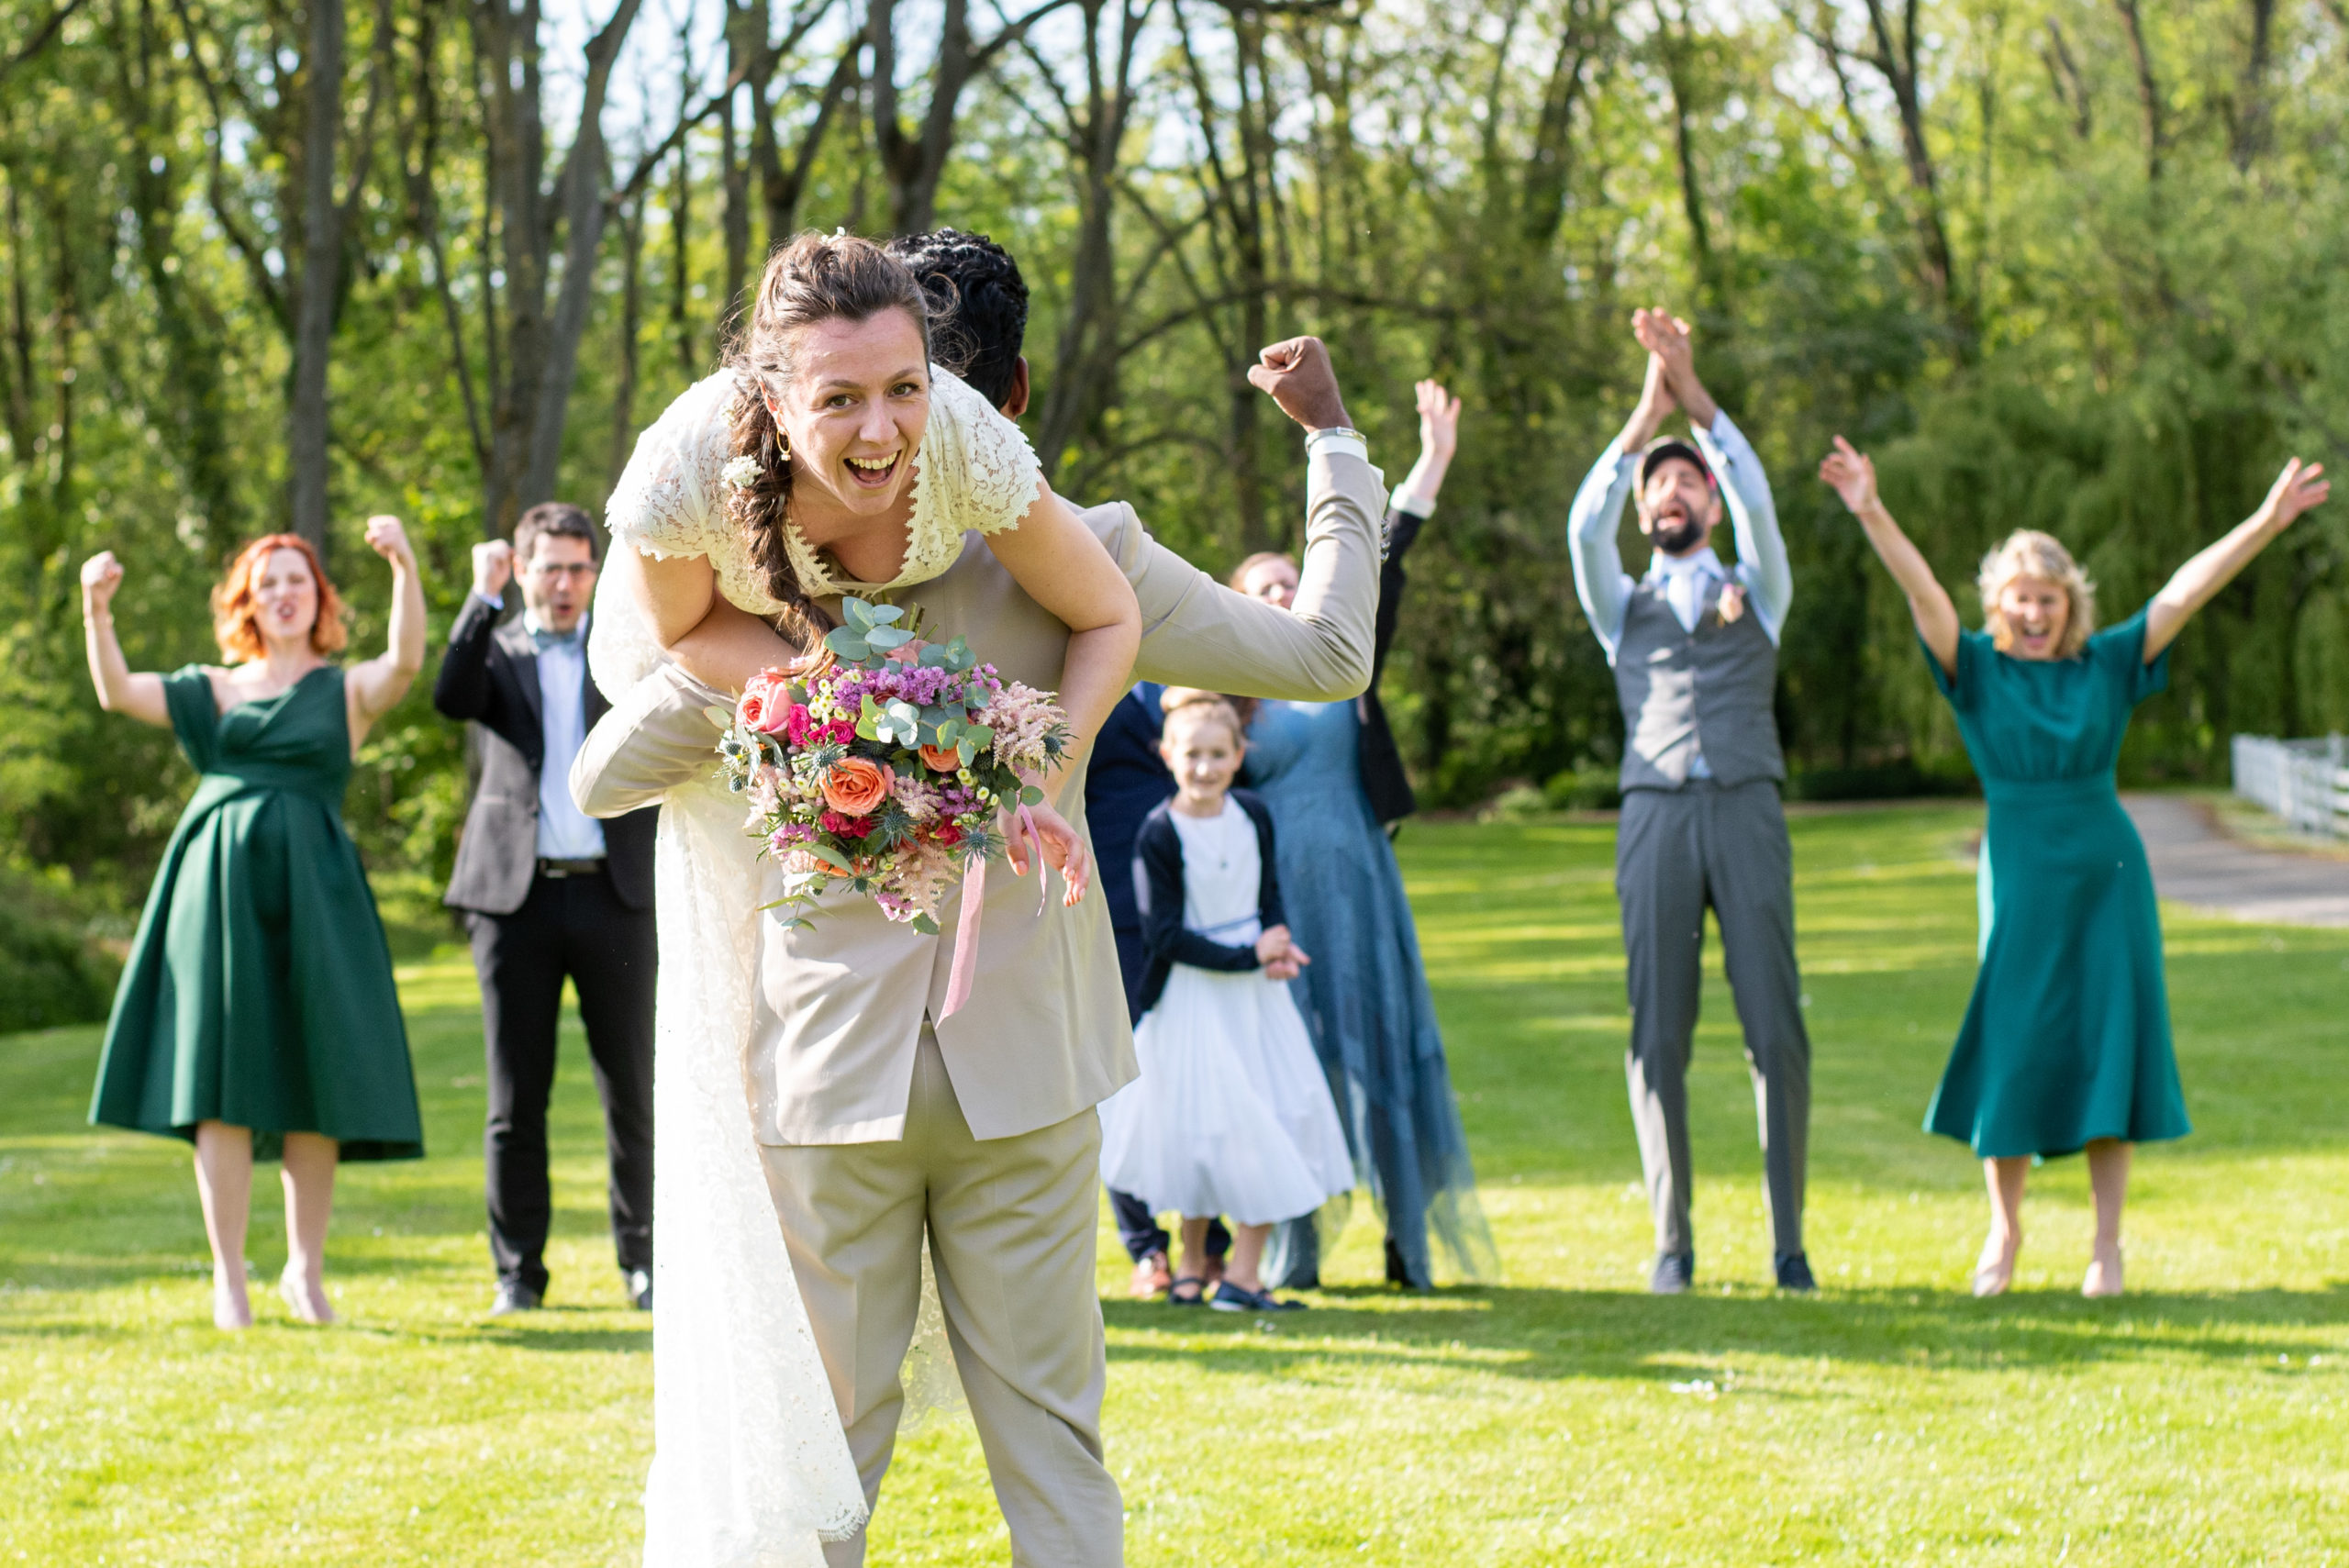 Photographe mariage lyon